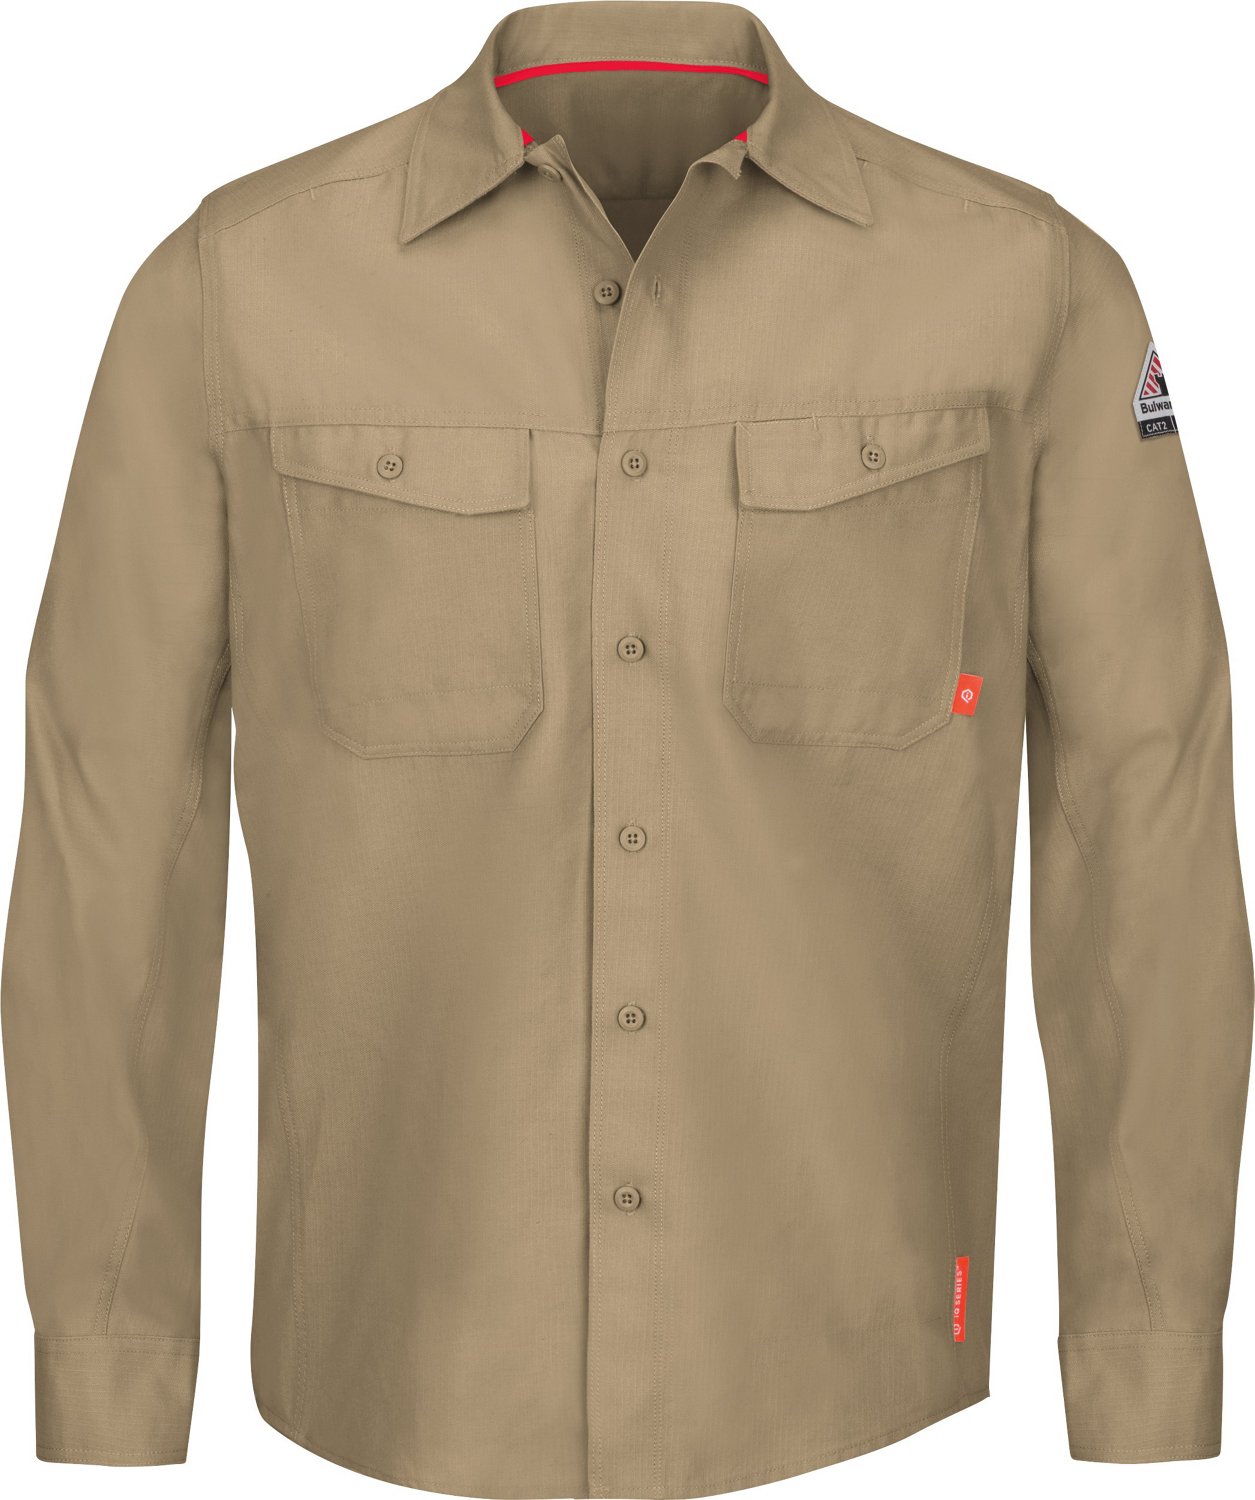 Bulwark Mens iQ Series Endurance Flame-Resistant Work Shirt